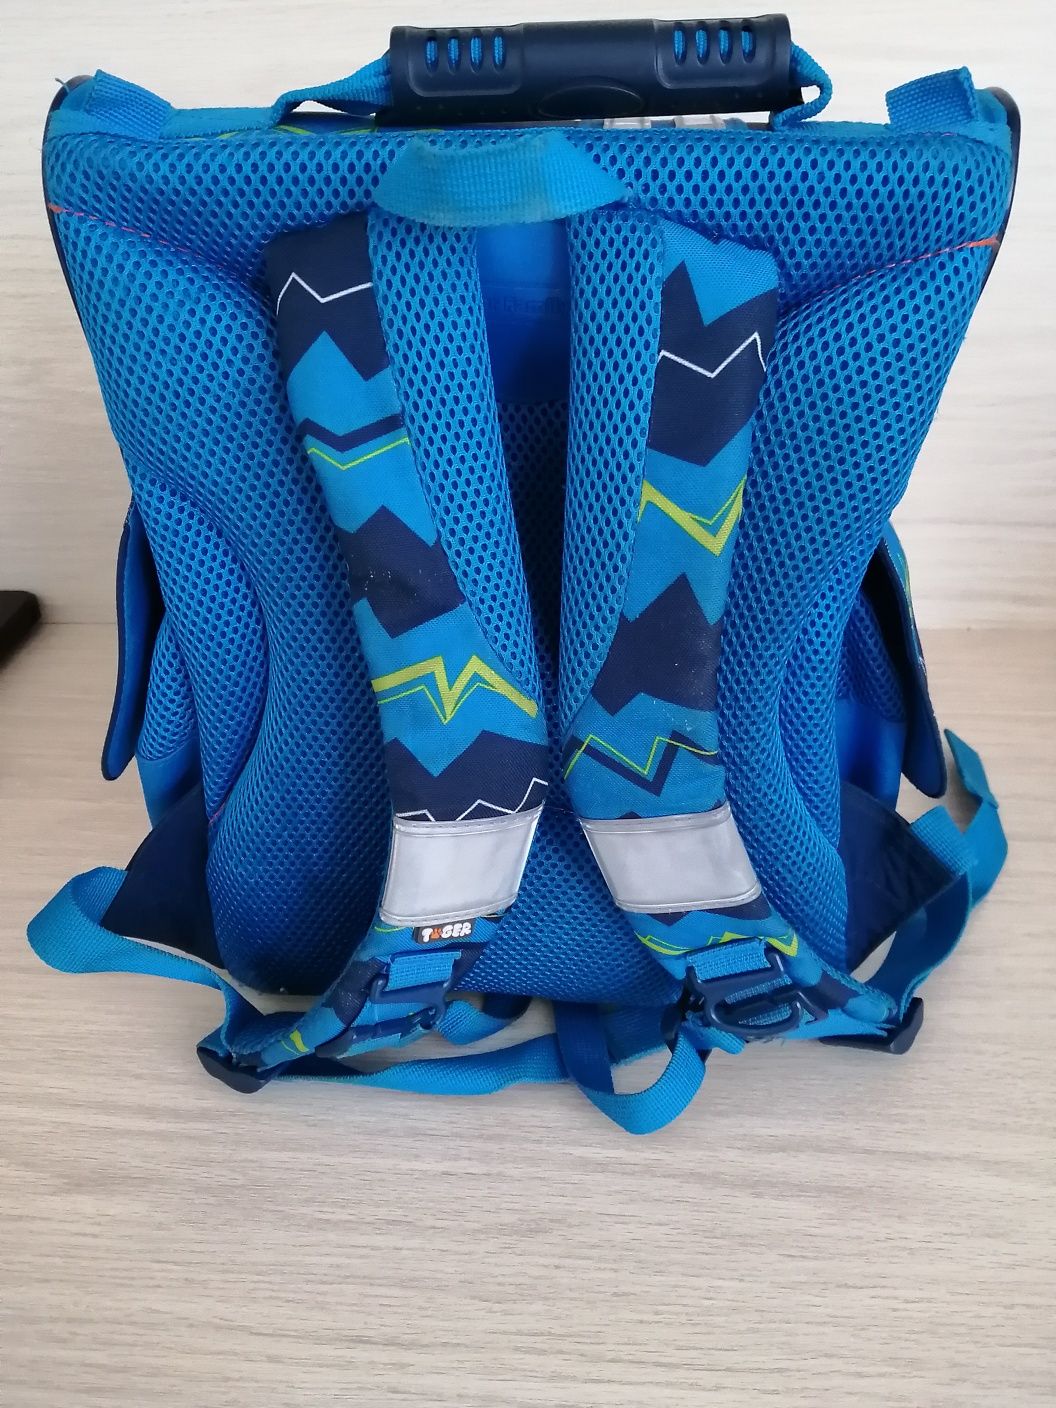 Рюкзак для мальчика, начальная школа